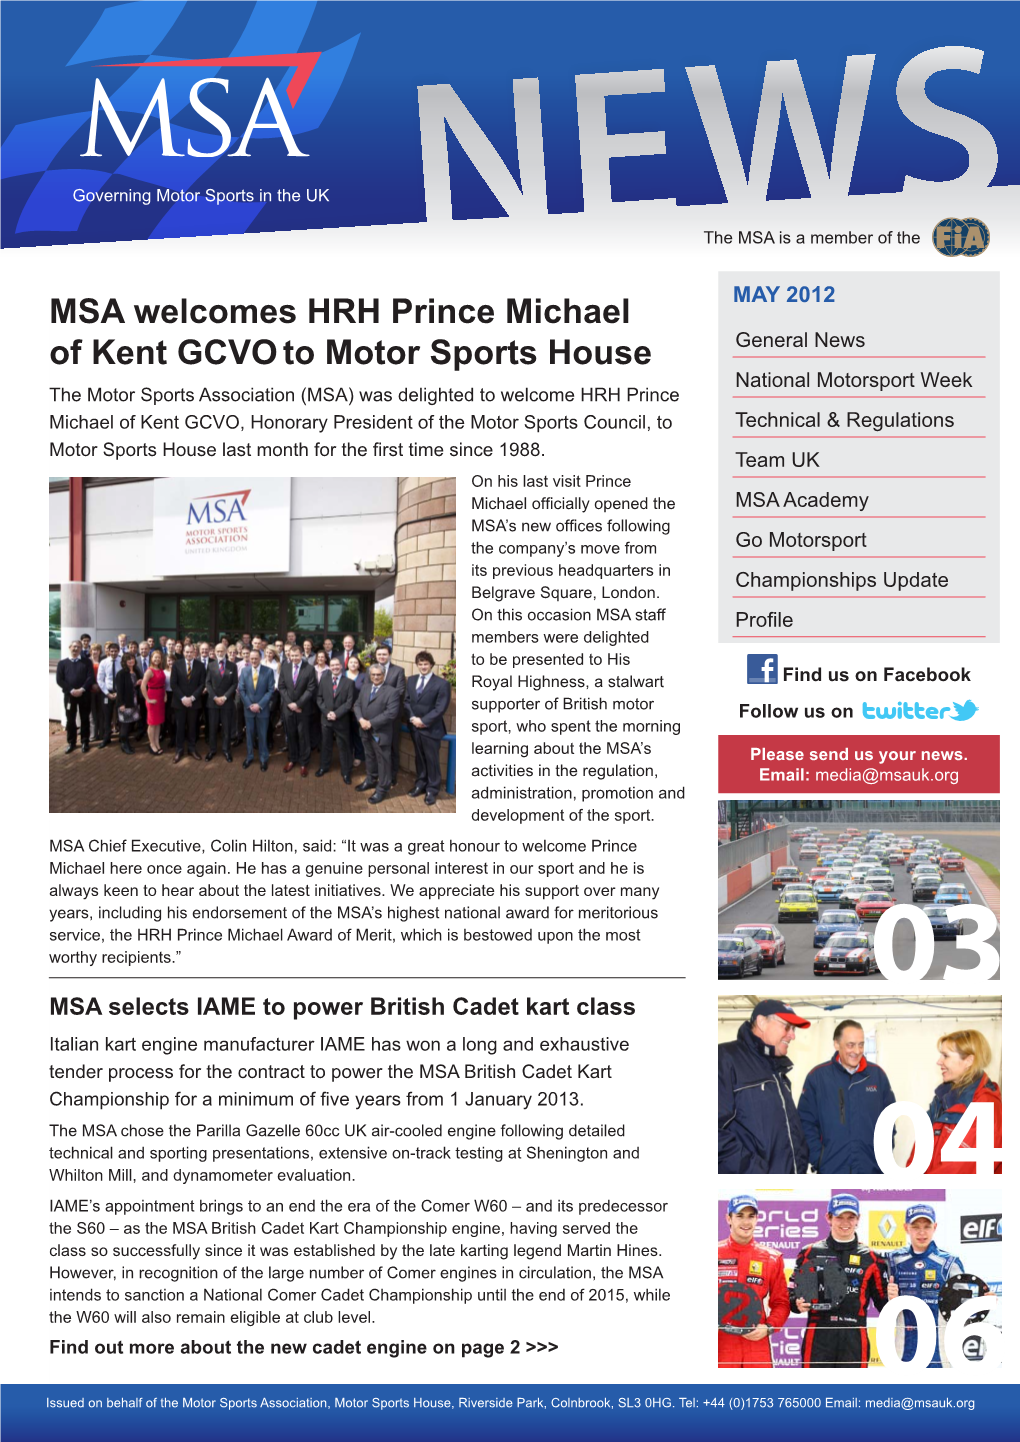 MSA Welcomes HRH Prince Michael of Kent Gcvoto Motor Sports House